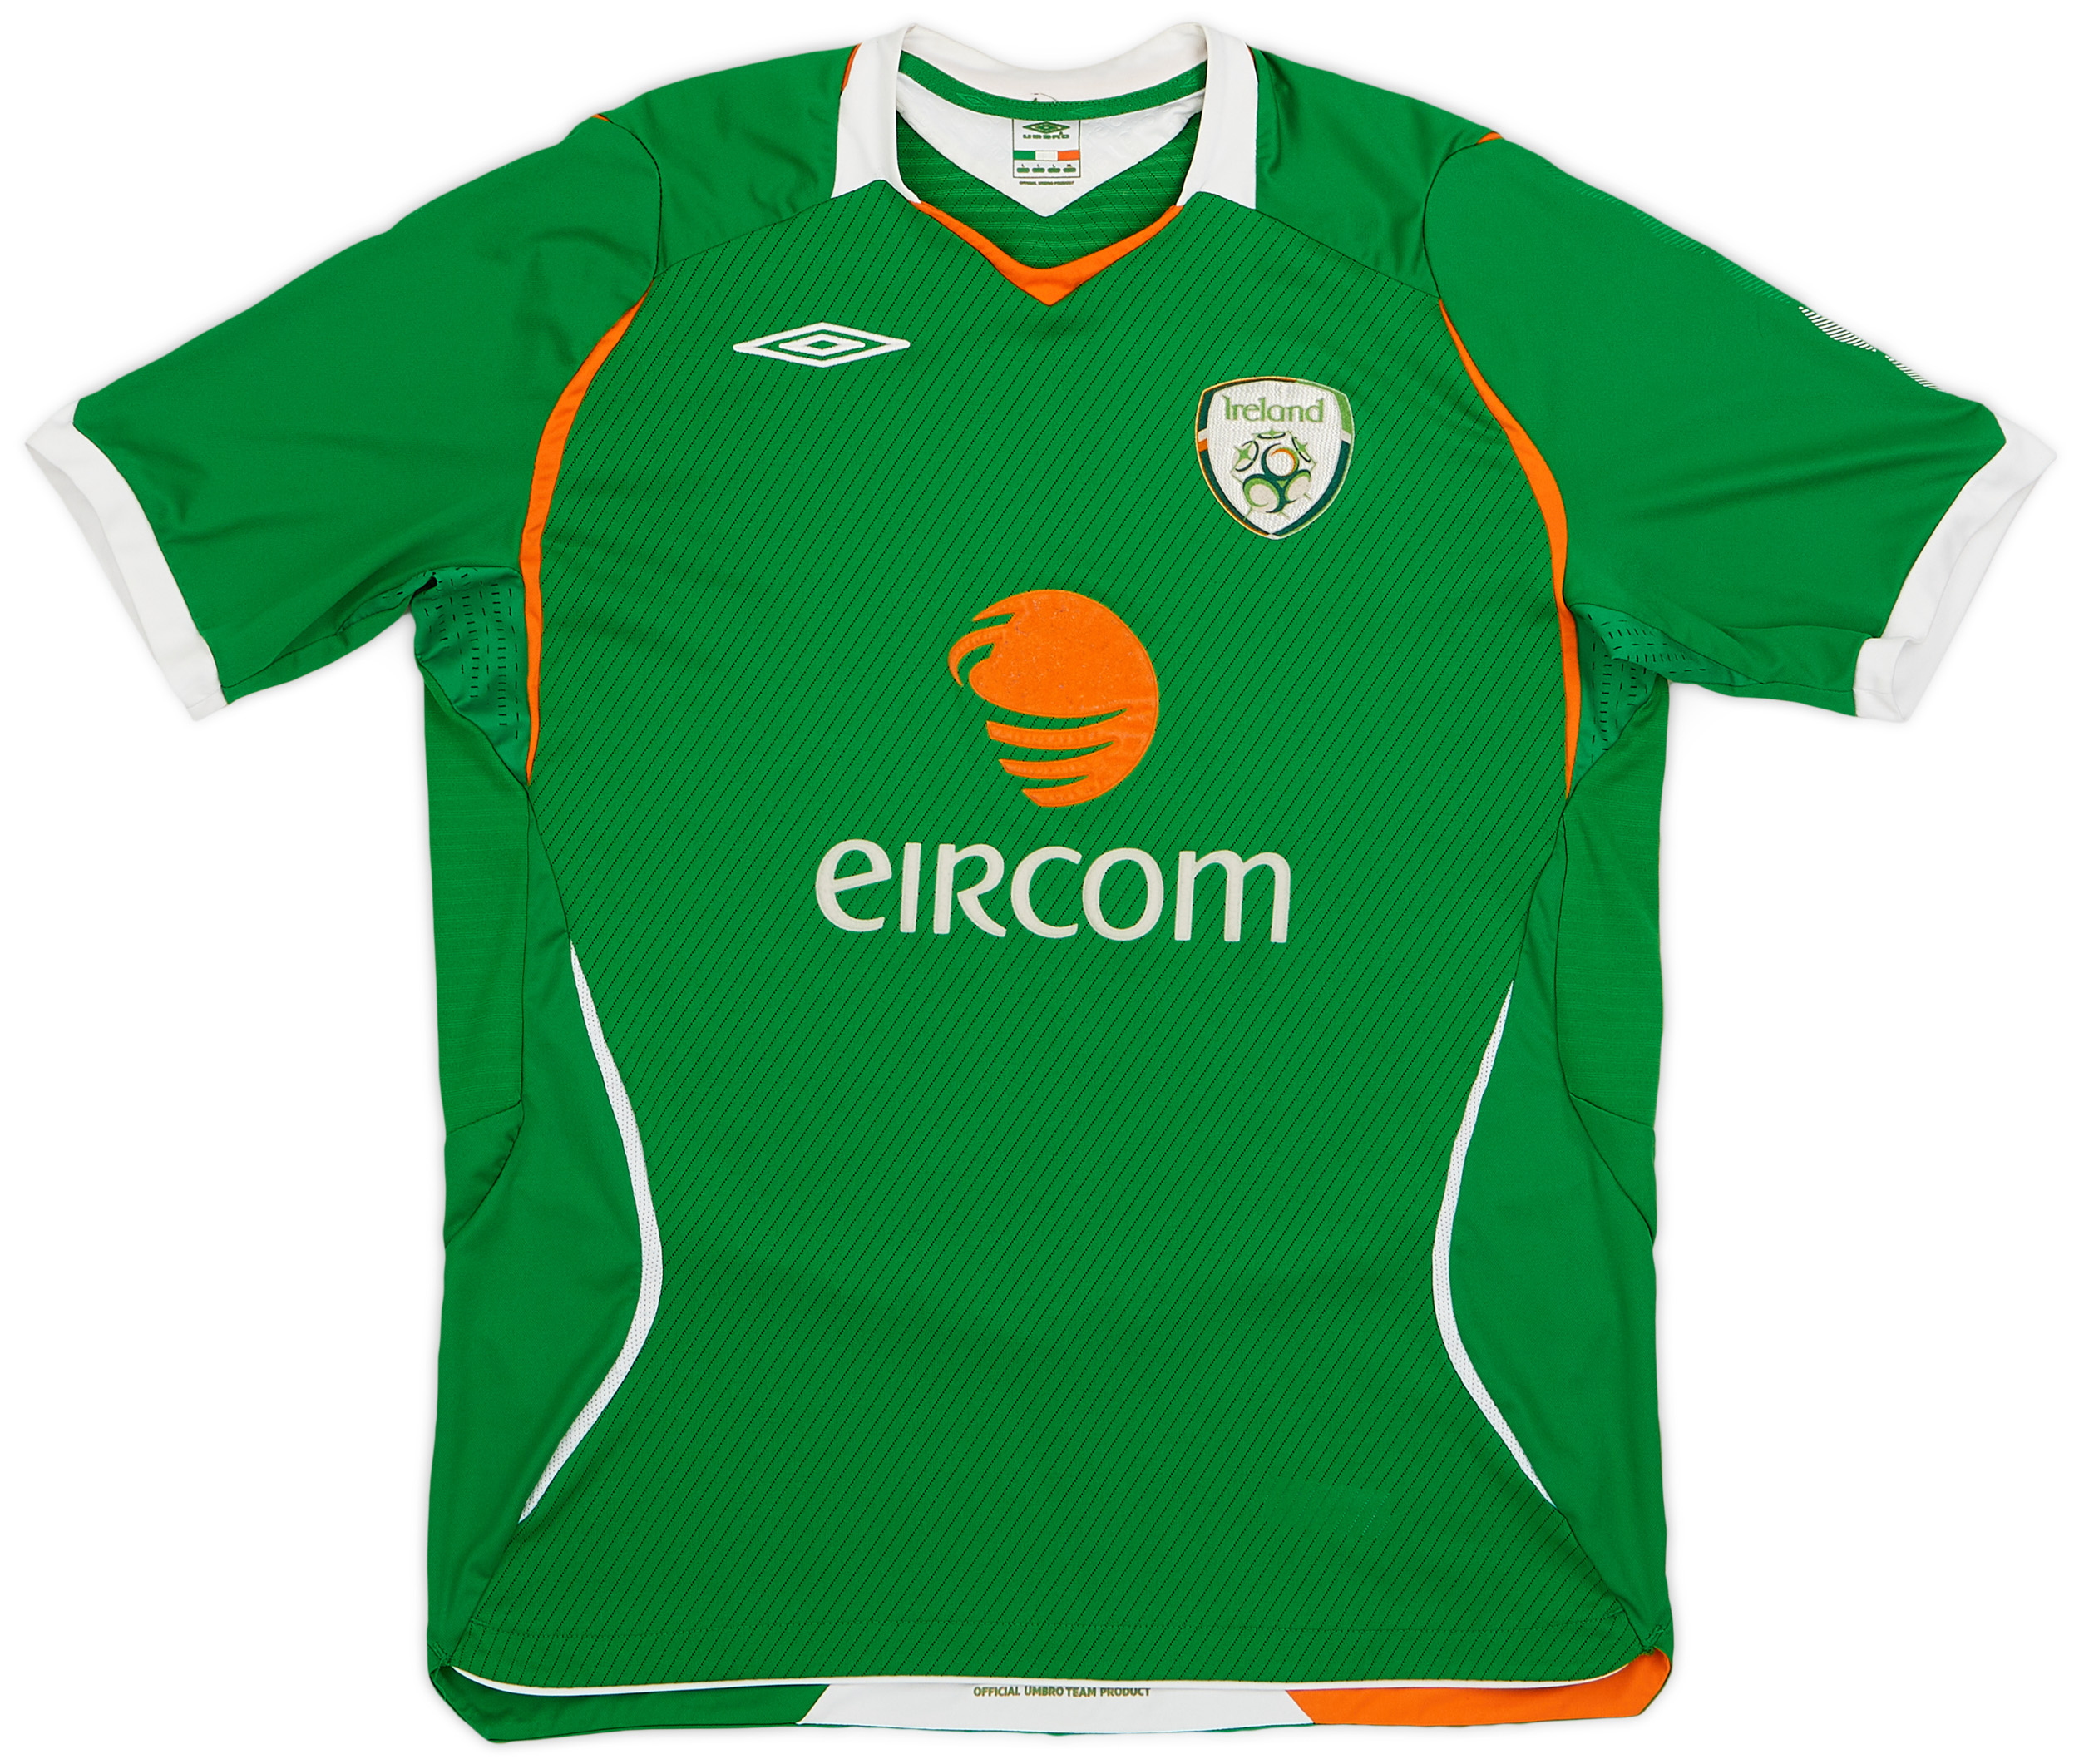 2008-10 Republic of Ireland Home Shirt - 6/10 - ()